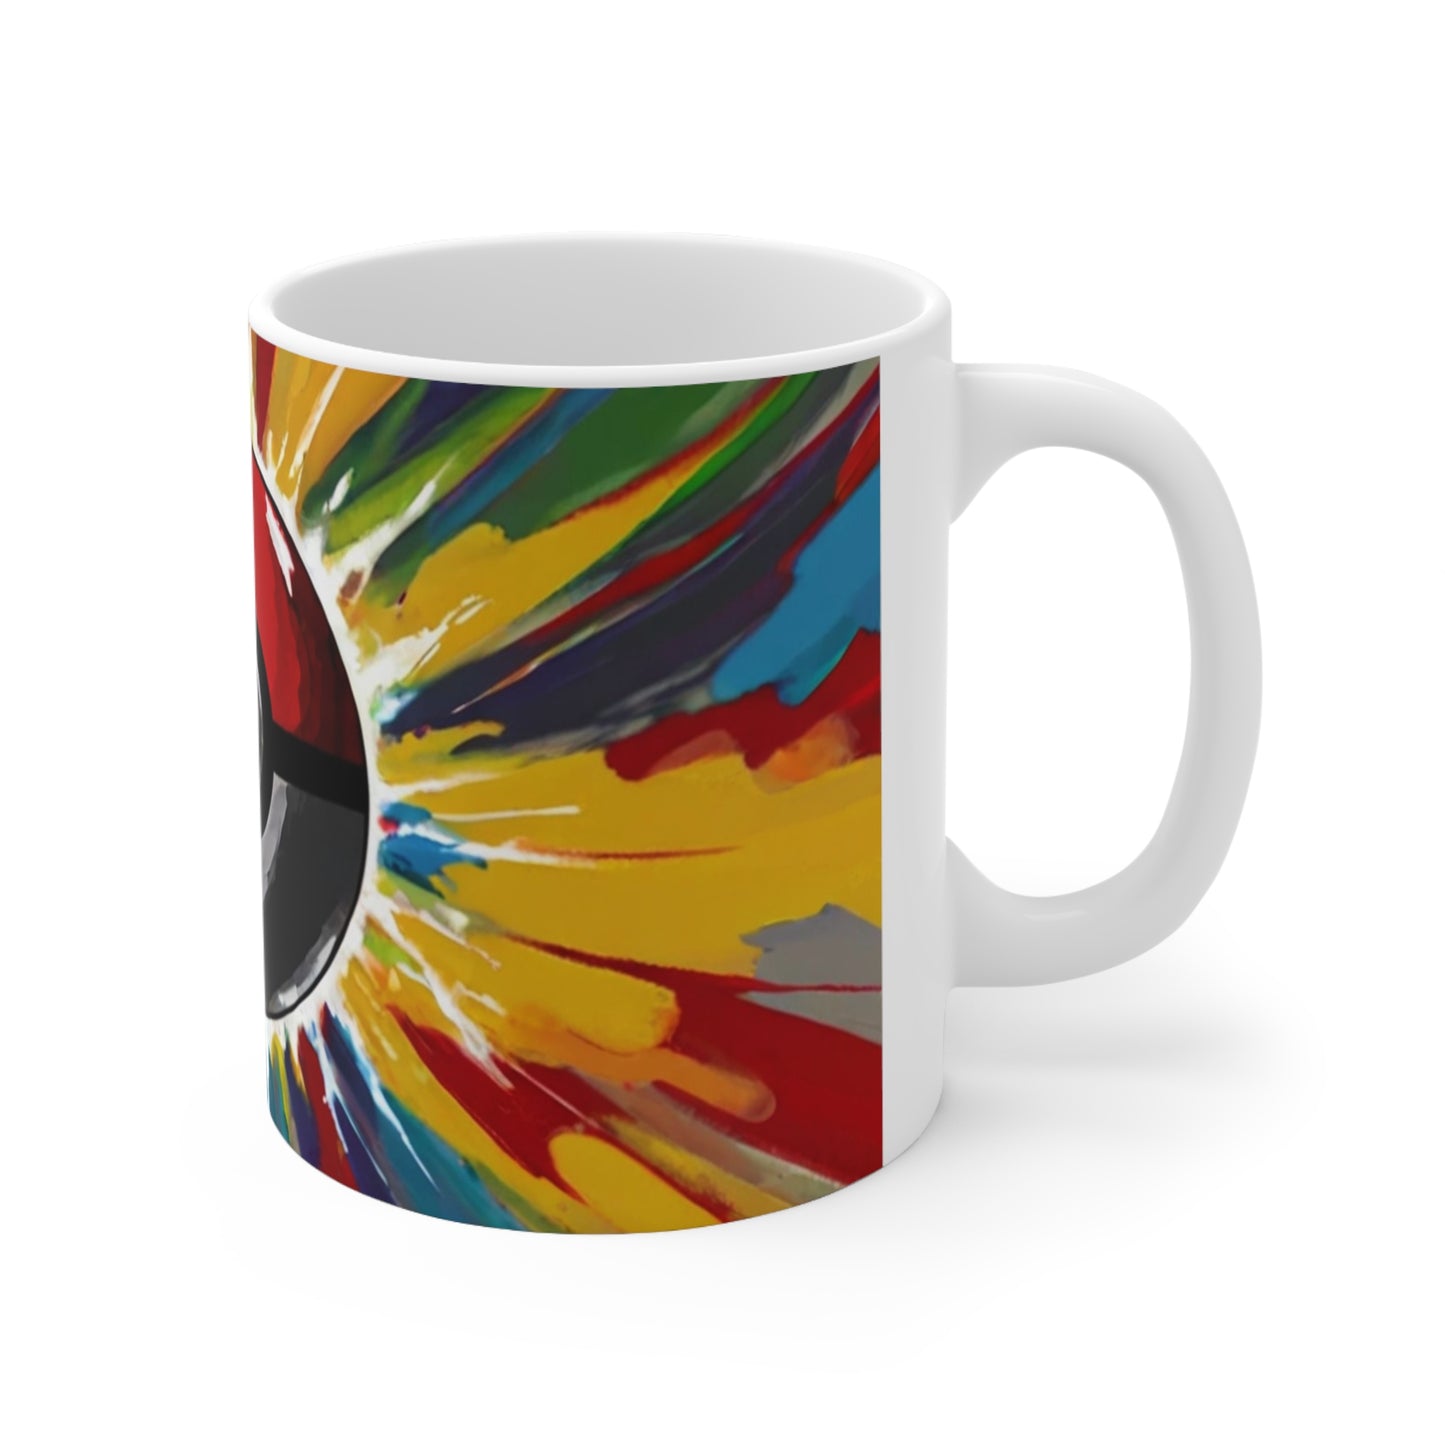 Colourful Poke-Ball Art Mug - Ceramic Coffee Mug 11oz